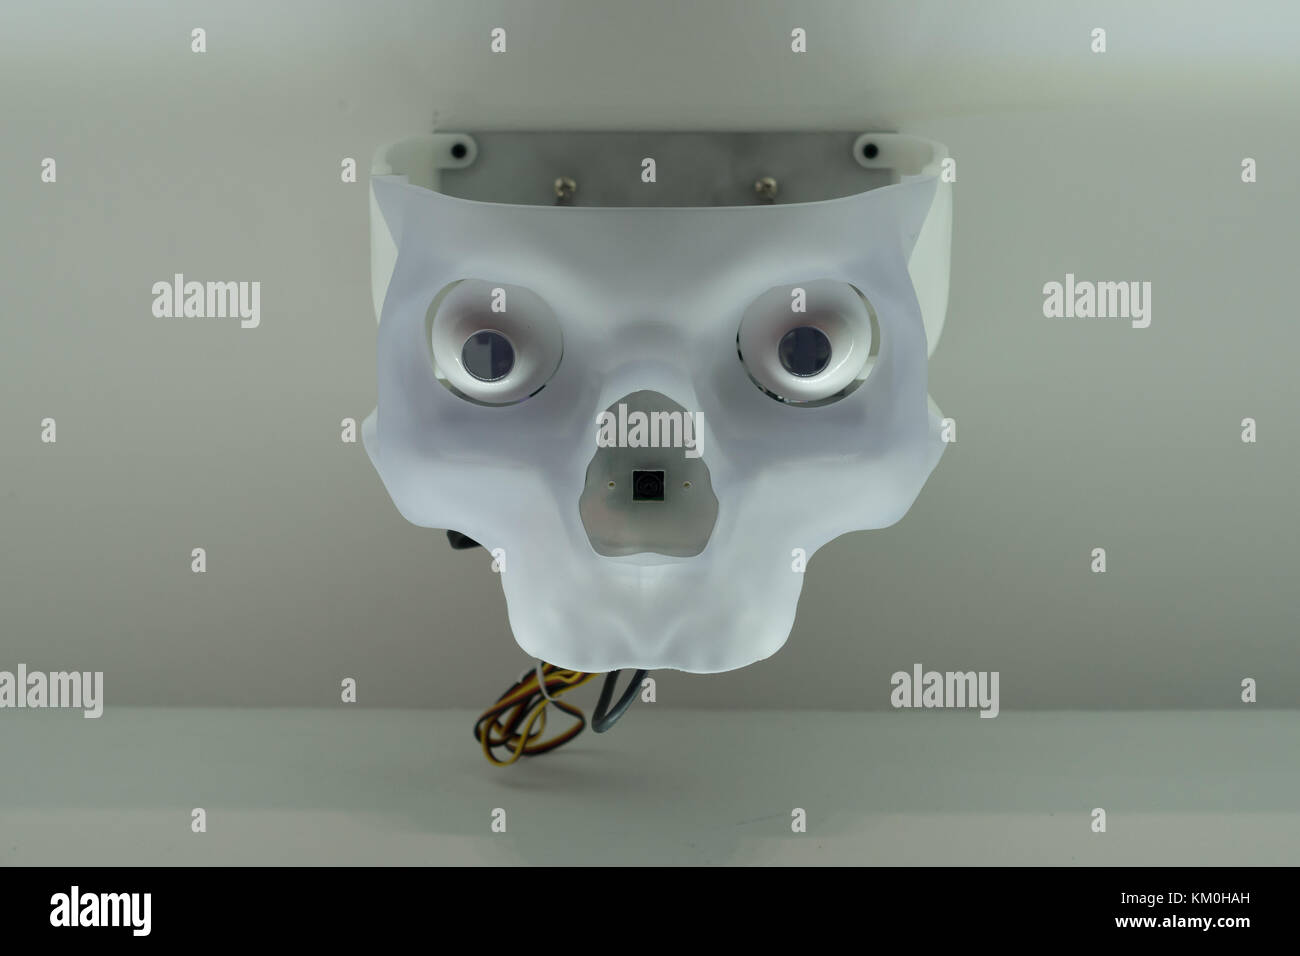 Futuristic robotic human skull face staring at the camera with blank eyes Stock Photo